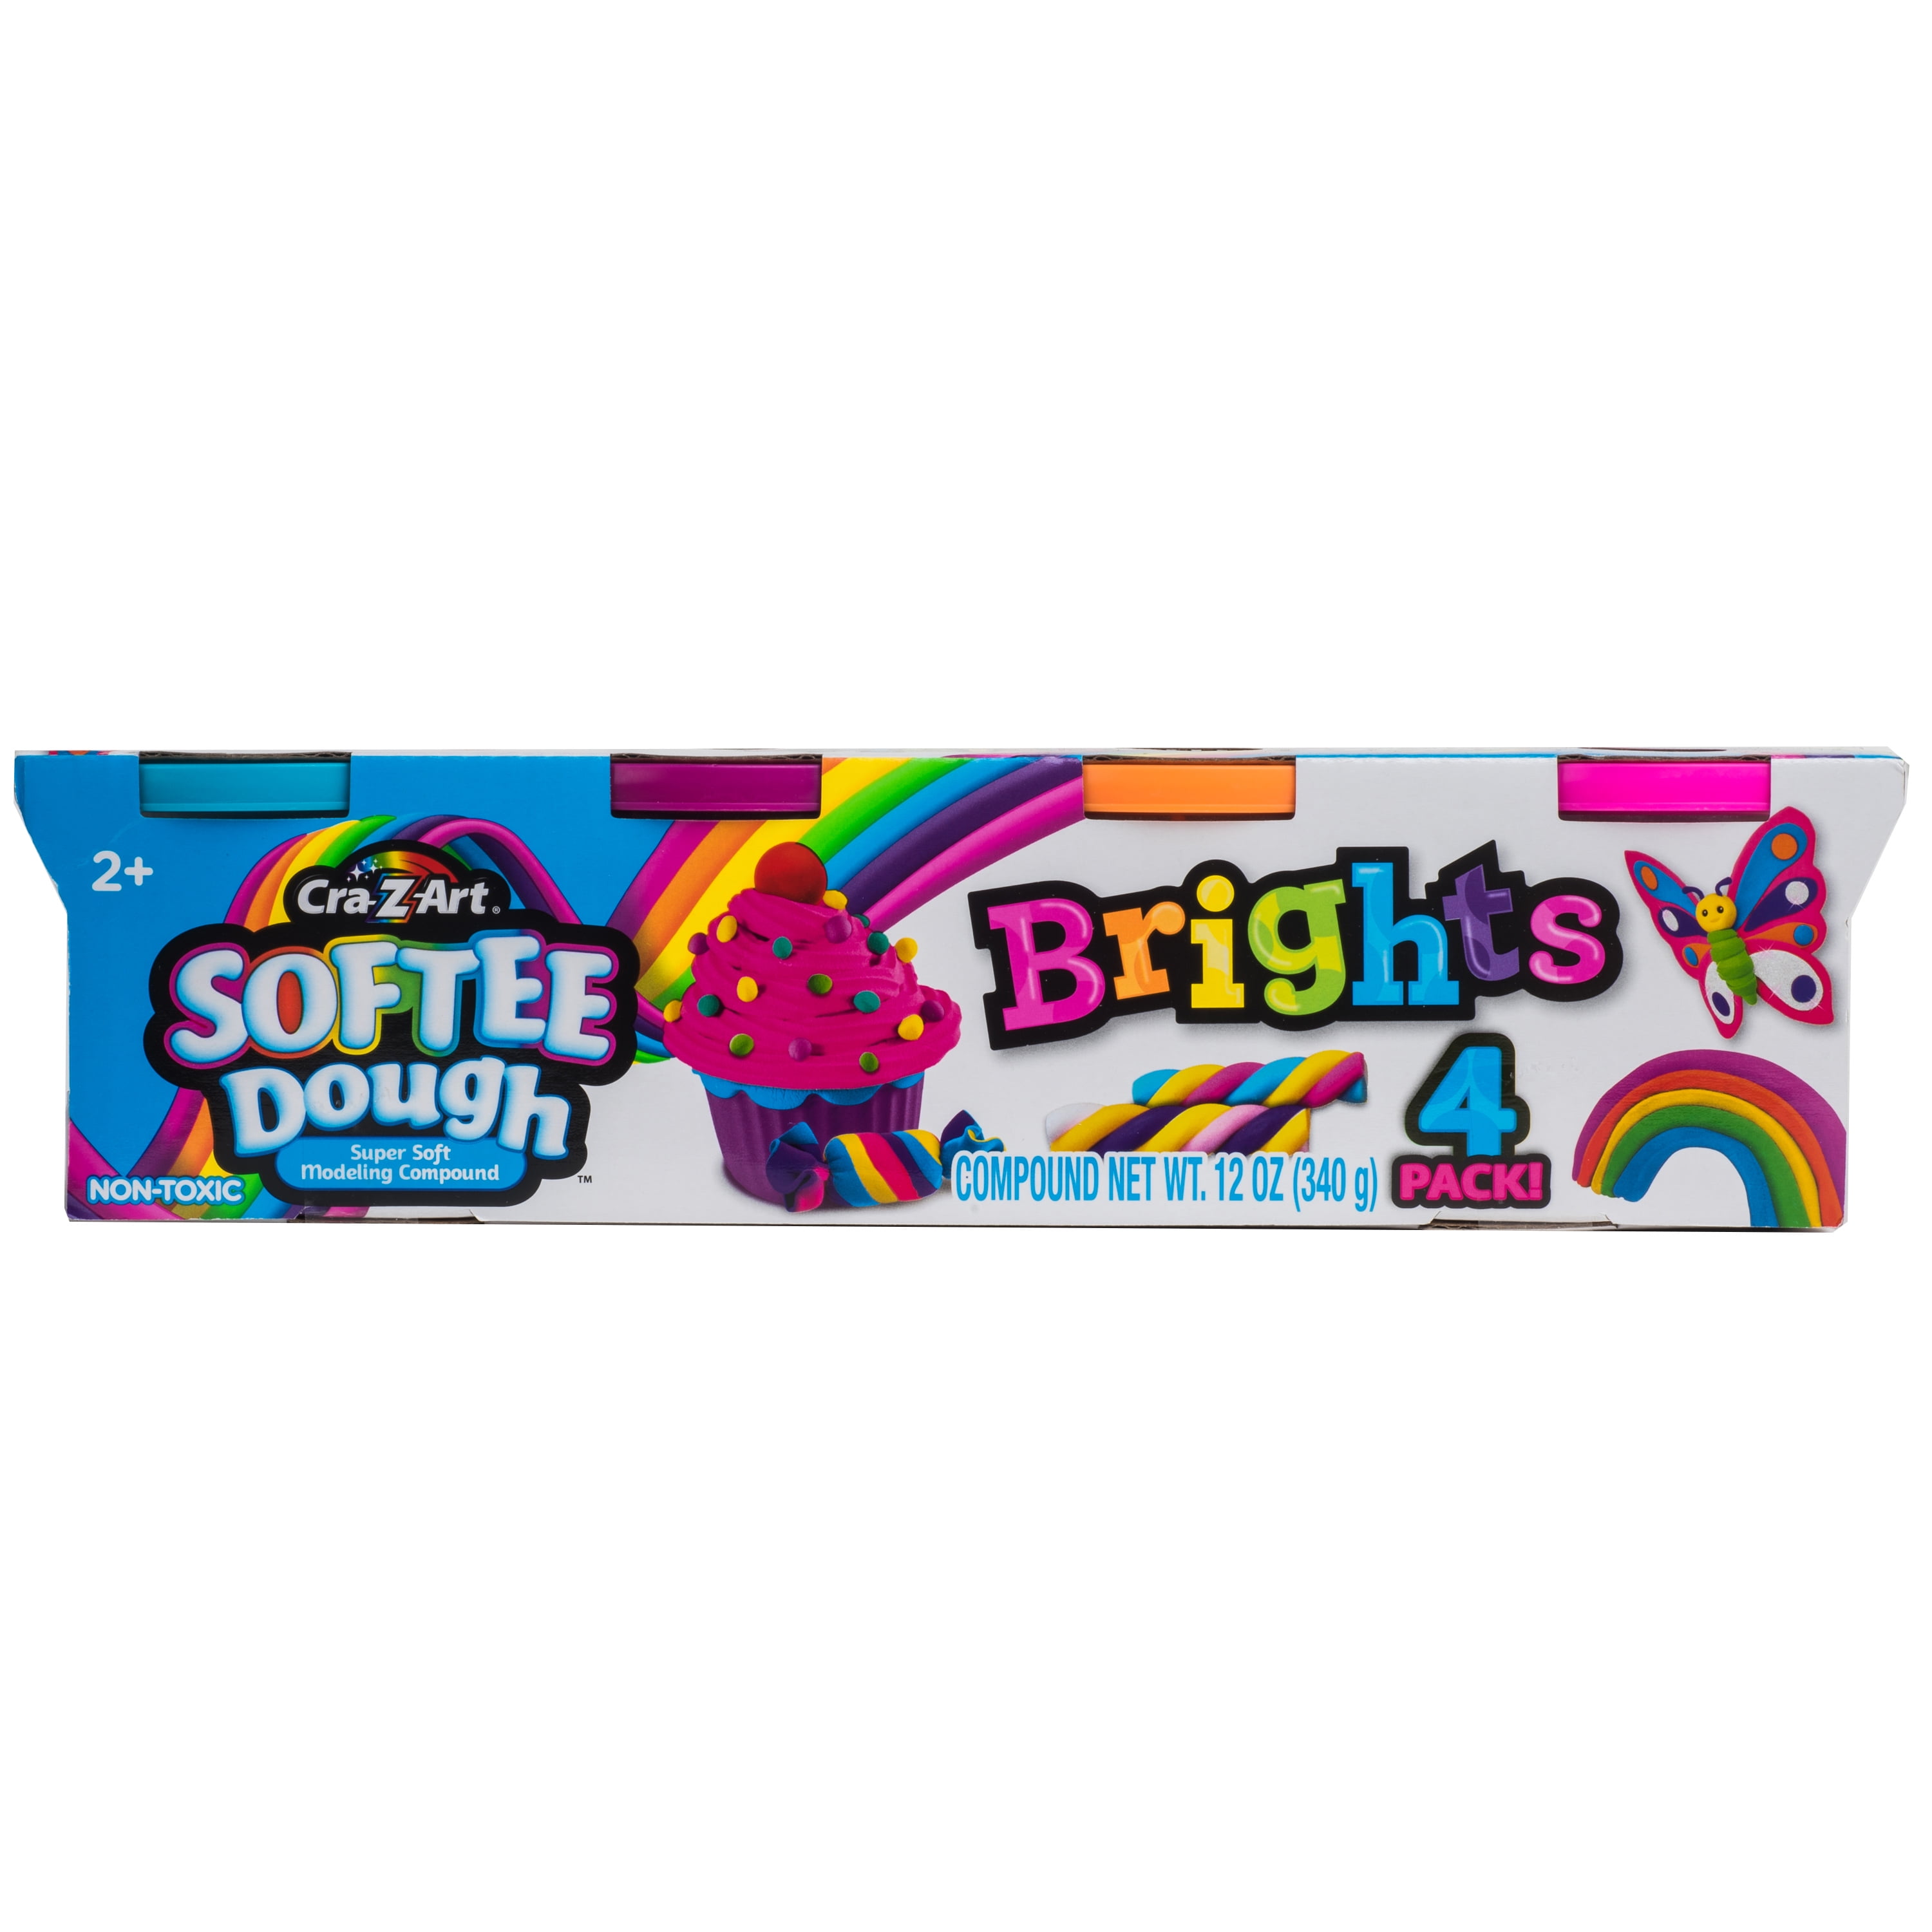 Cra-Z-Art Softee Dough Brights Multicolor Dough 4 Pack